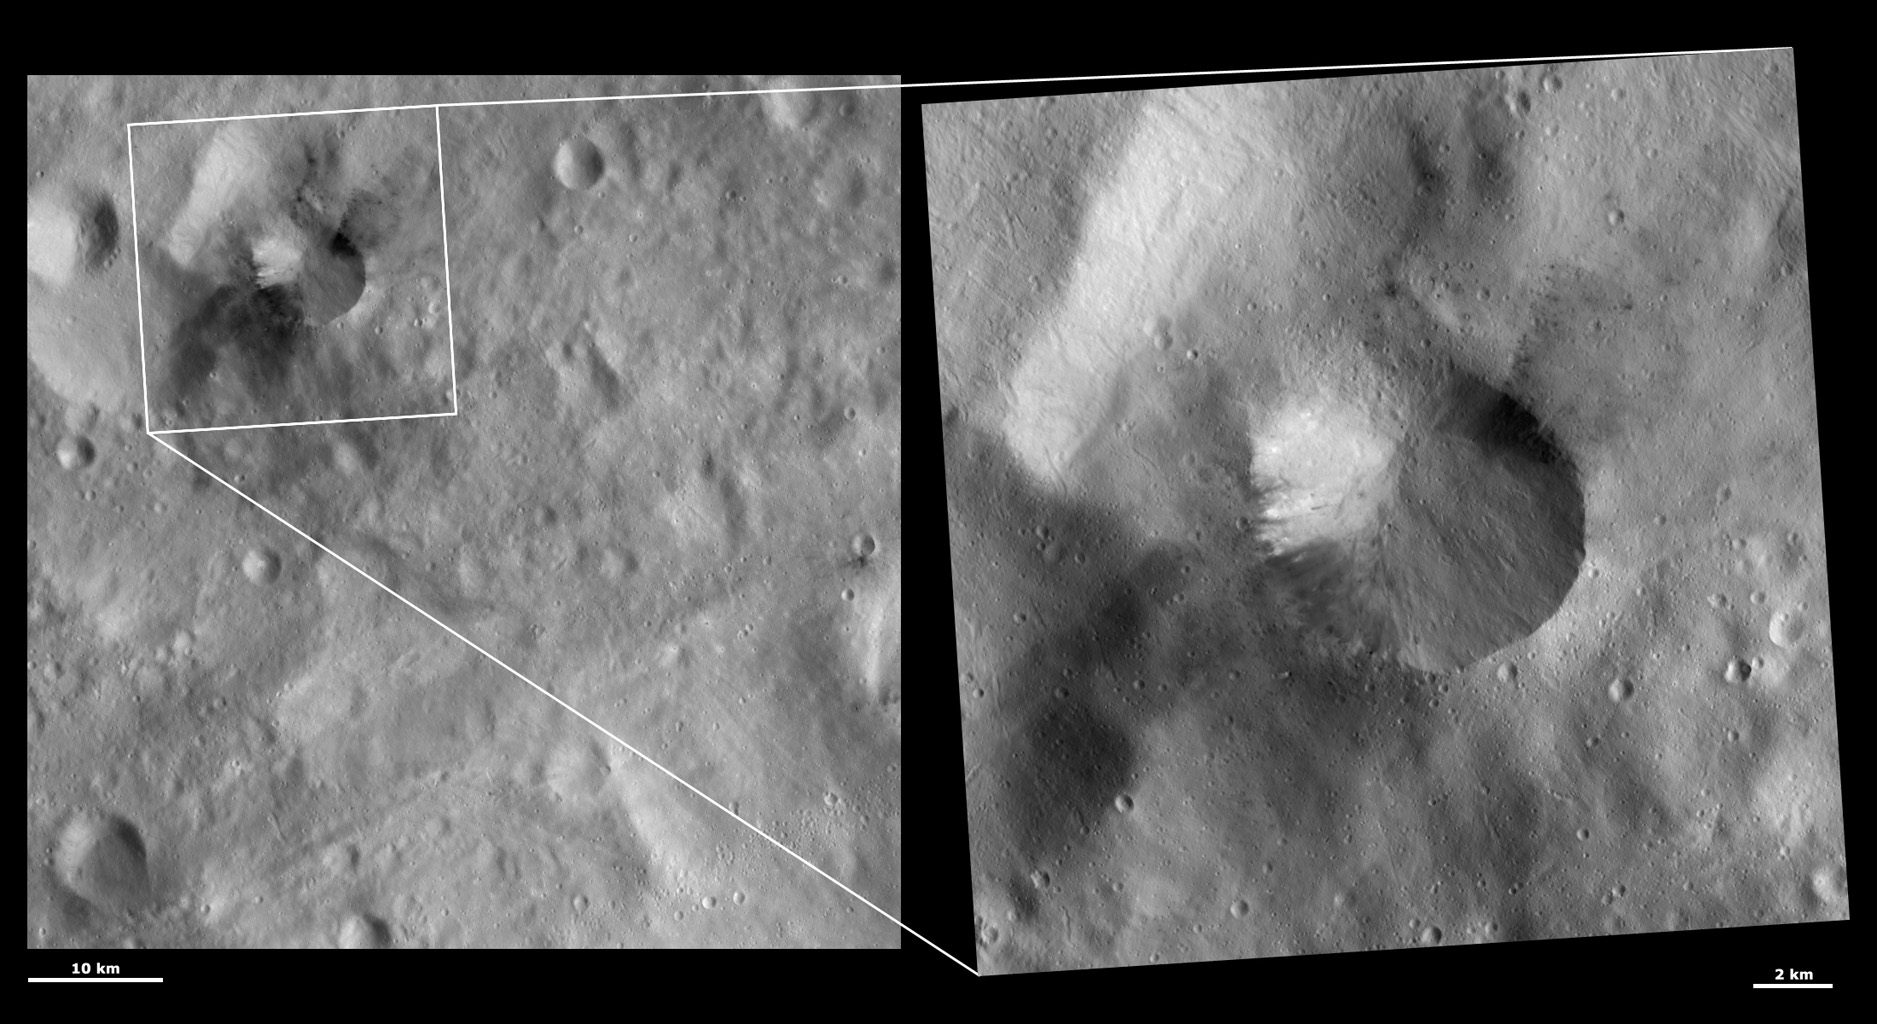 HAMO and LAMO Images of Occia Crater